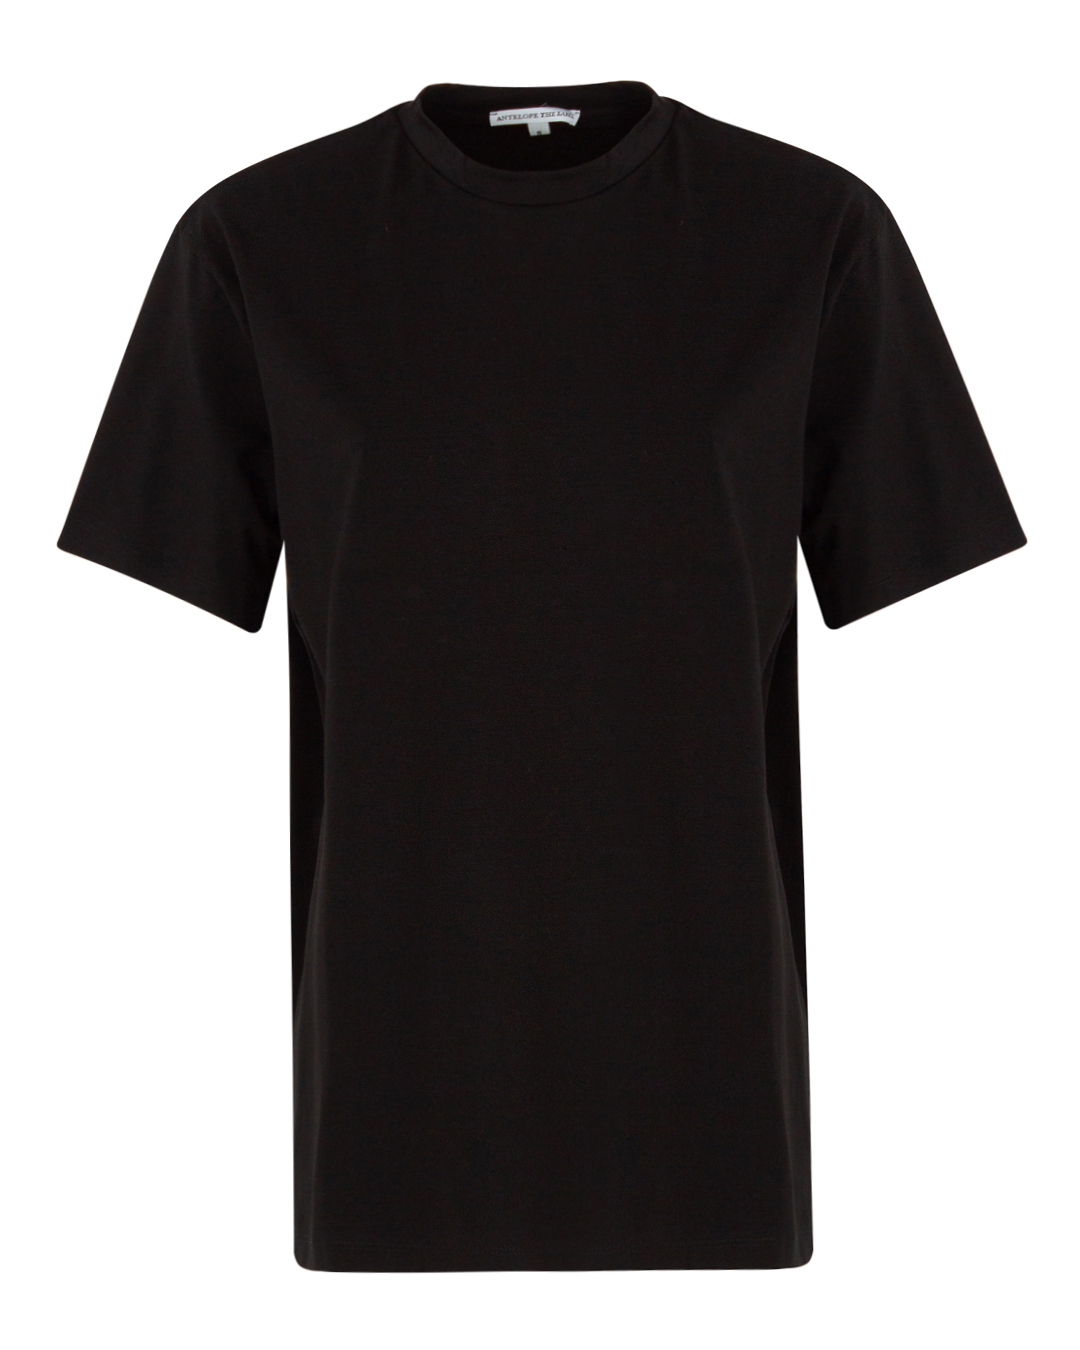 хлопковая футболка ANTELOPE THE LABEL T1.BLACK черный s, размер s